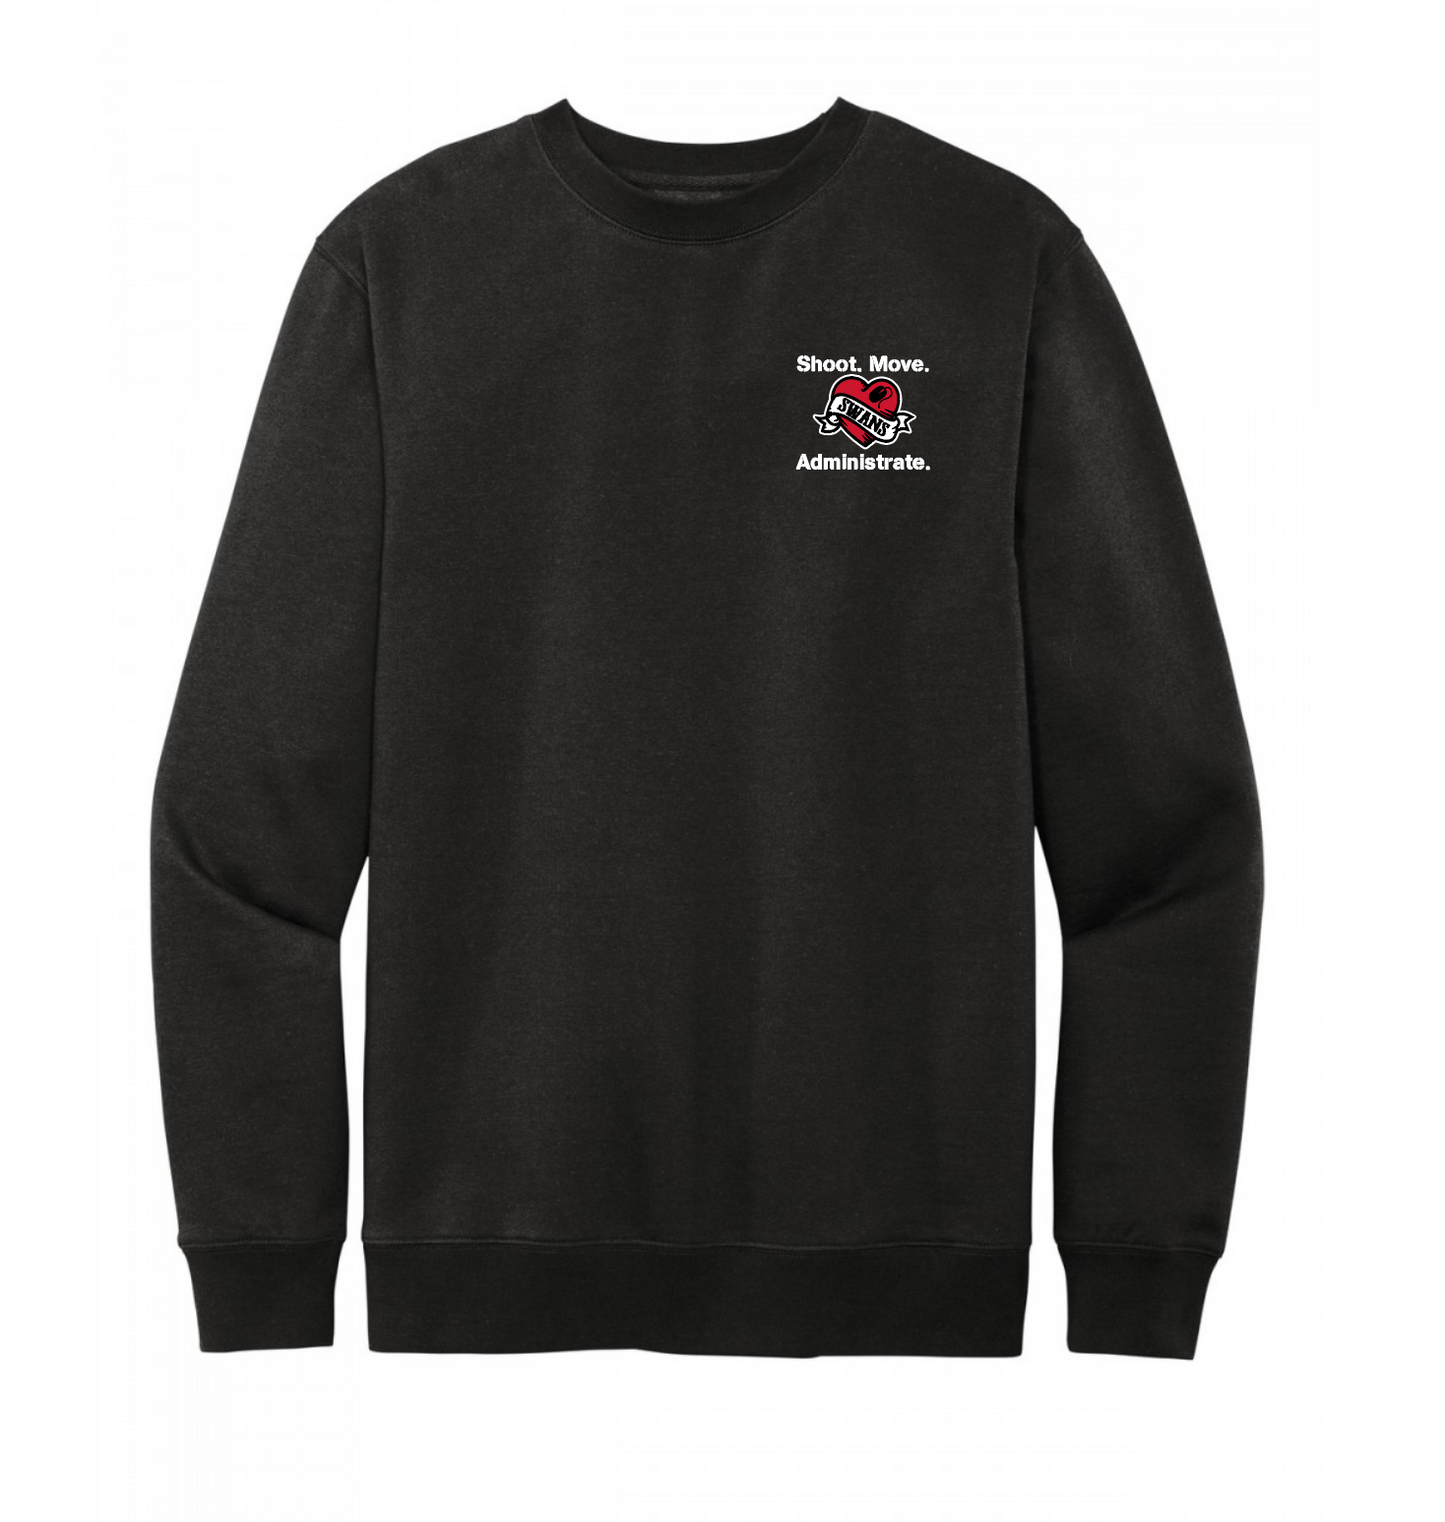 S1 Black Crewneck Sweatshirt